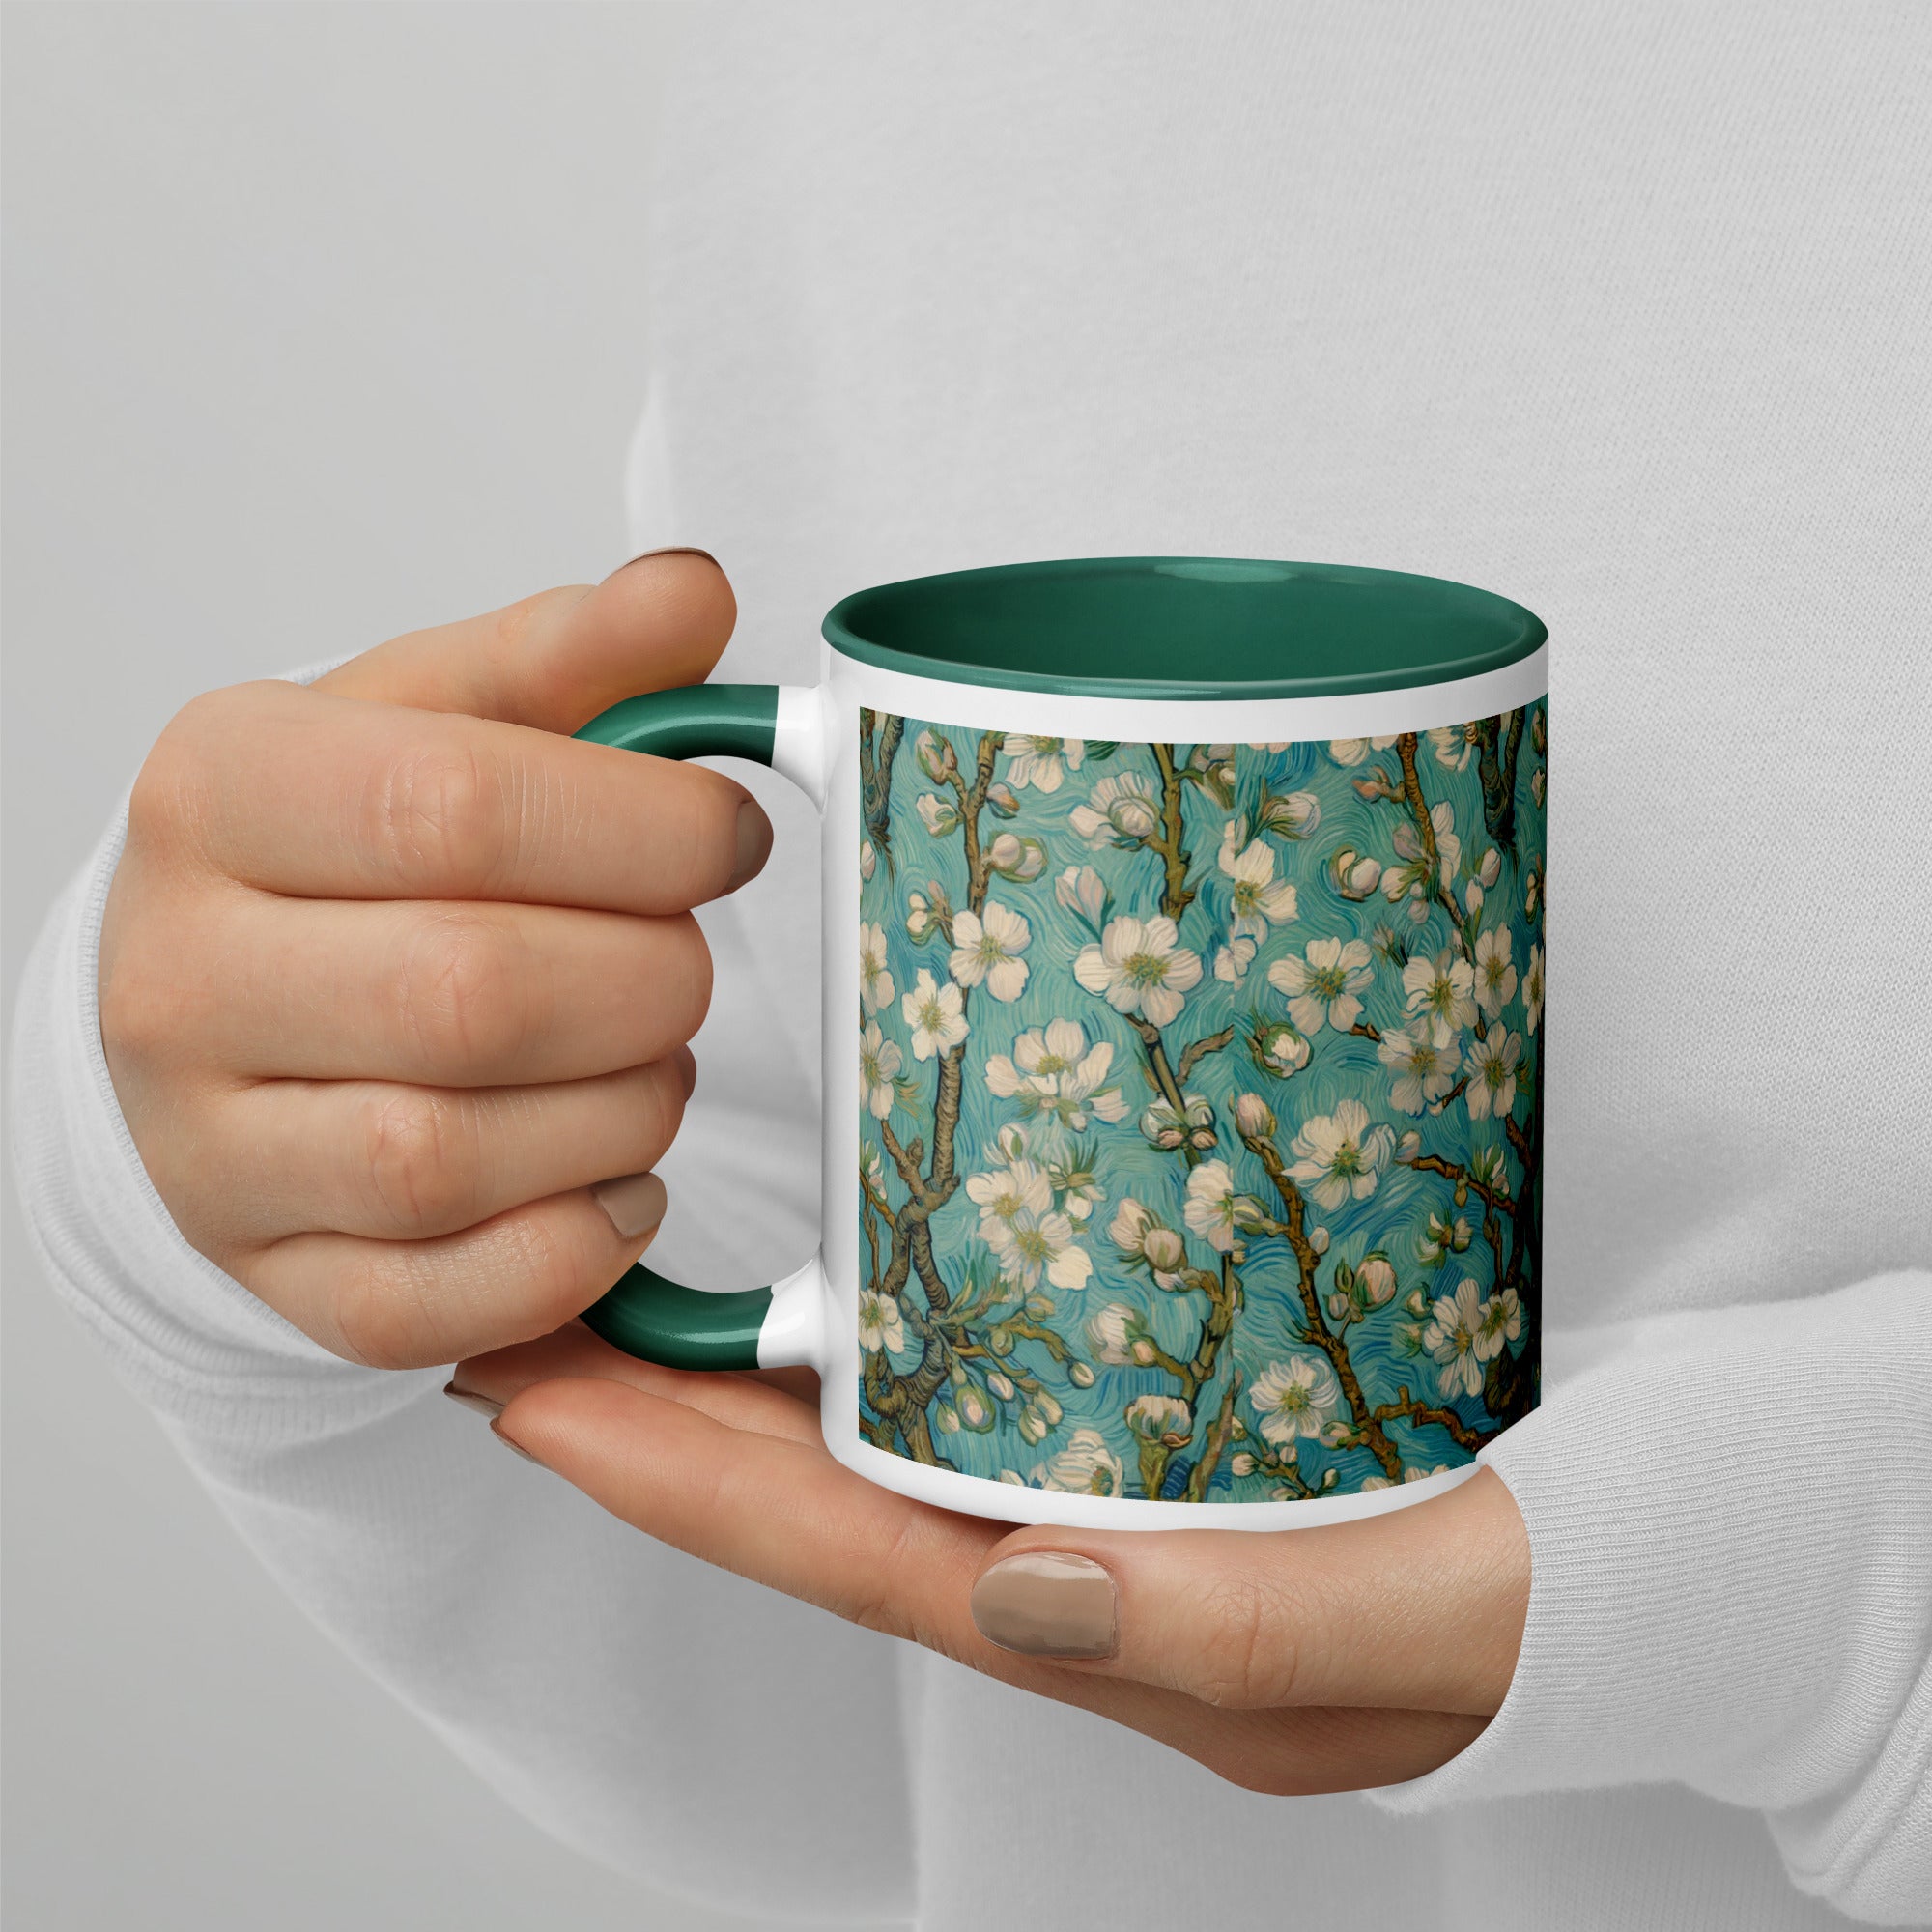 Vincent van Gogh 'Almond Blossom' Famous Painting Ceramic Mug | Premium Art Mug